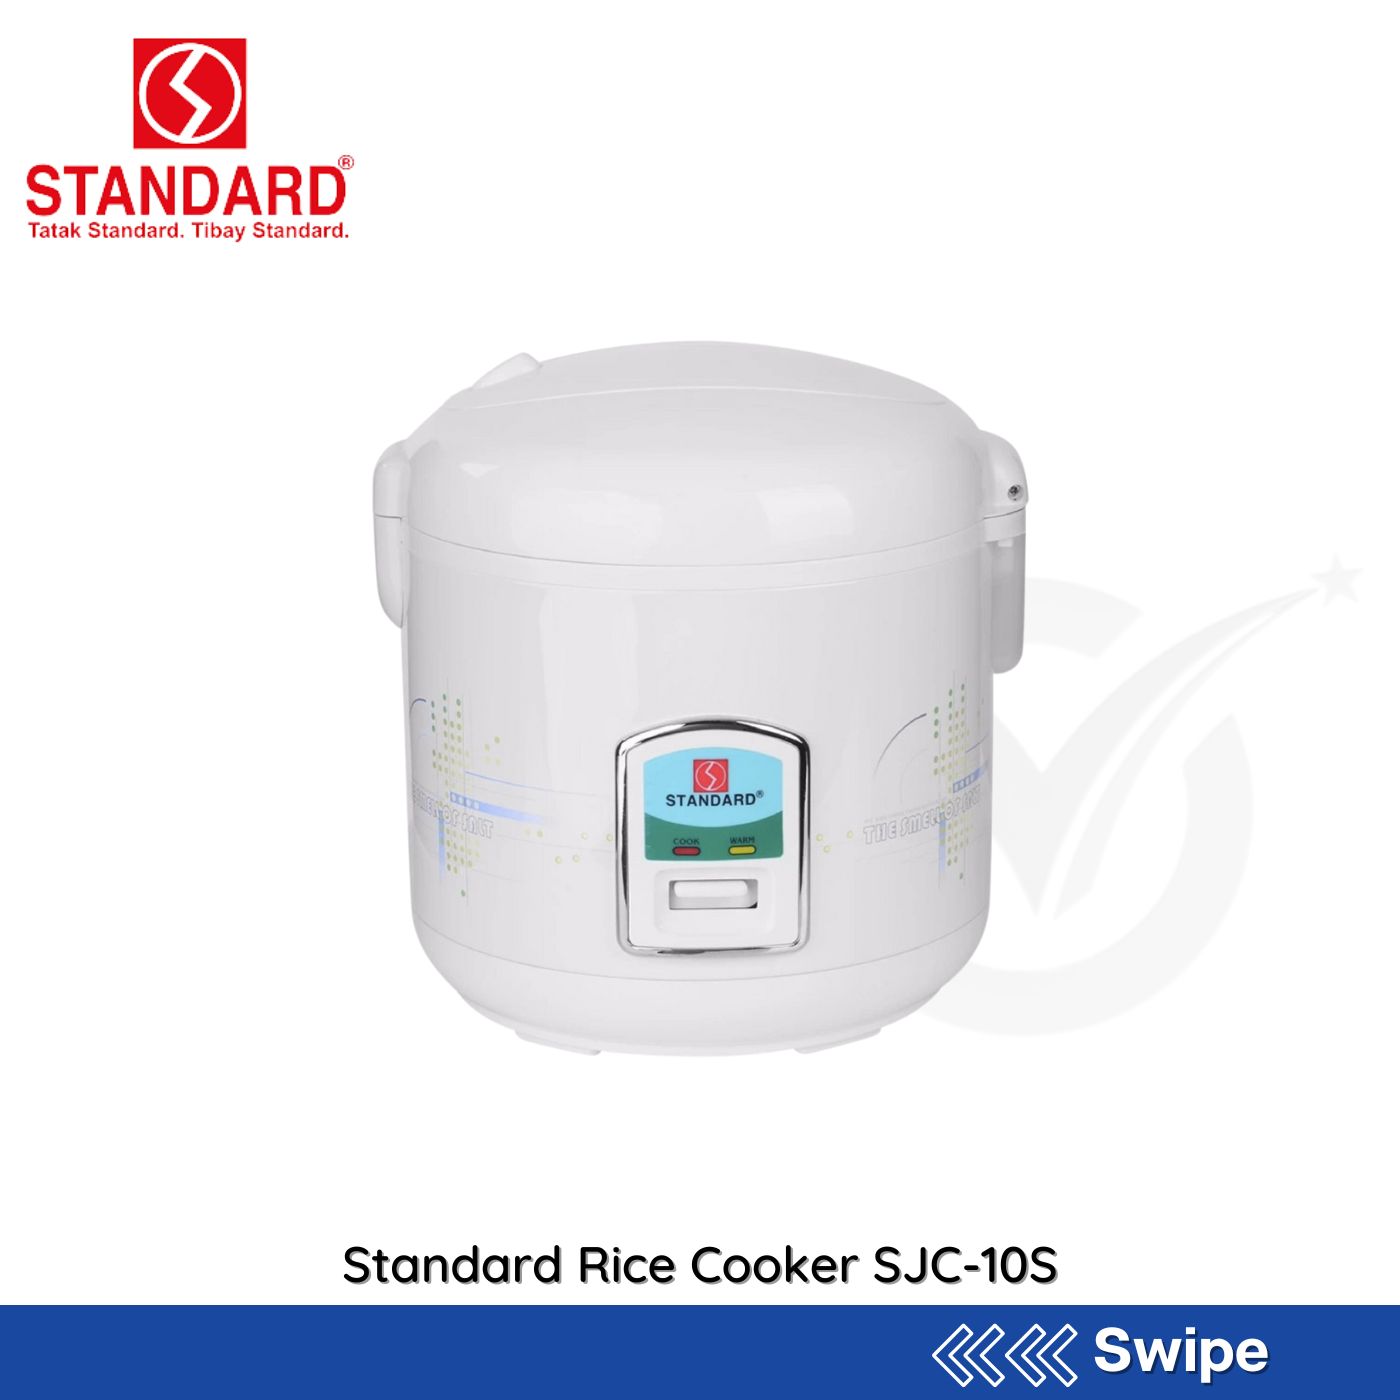 Standard Rice Cooker SJC-10S